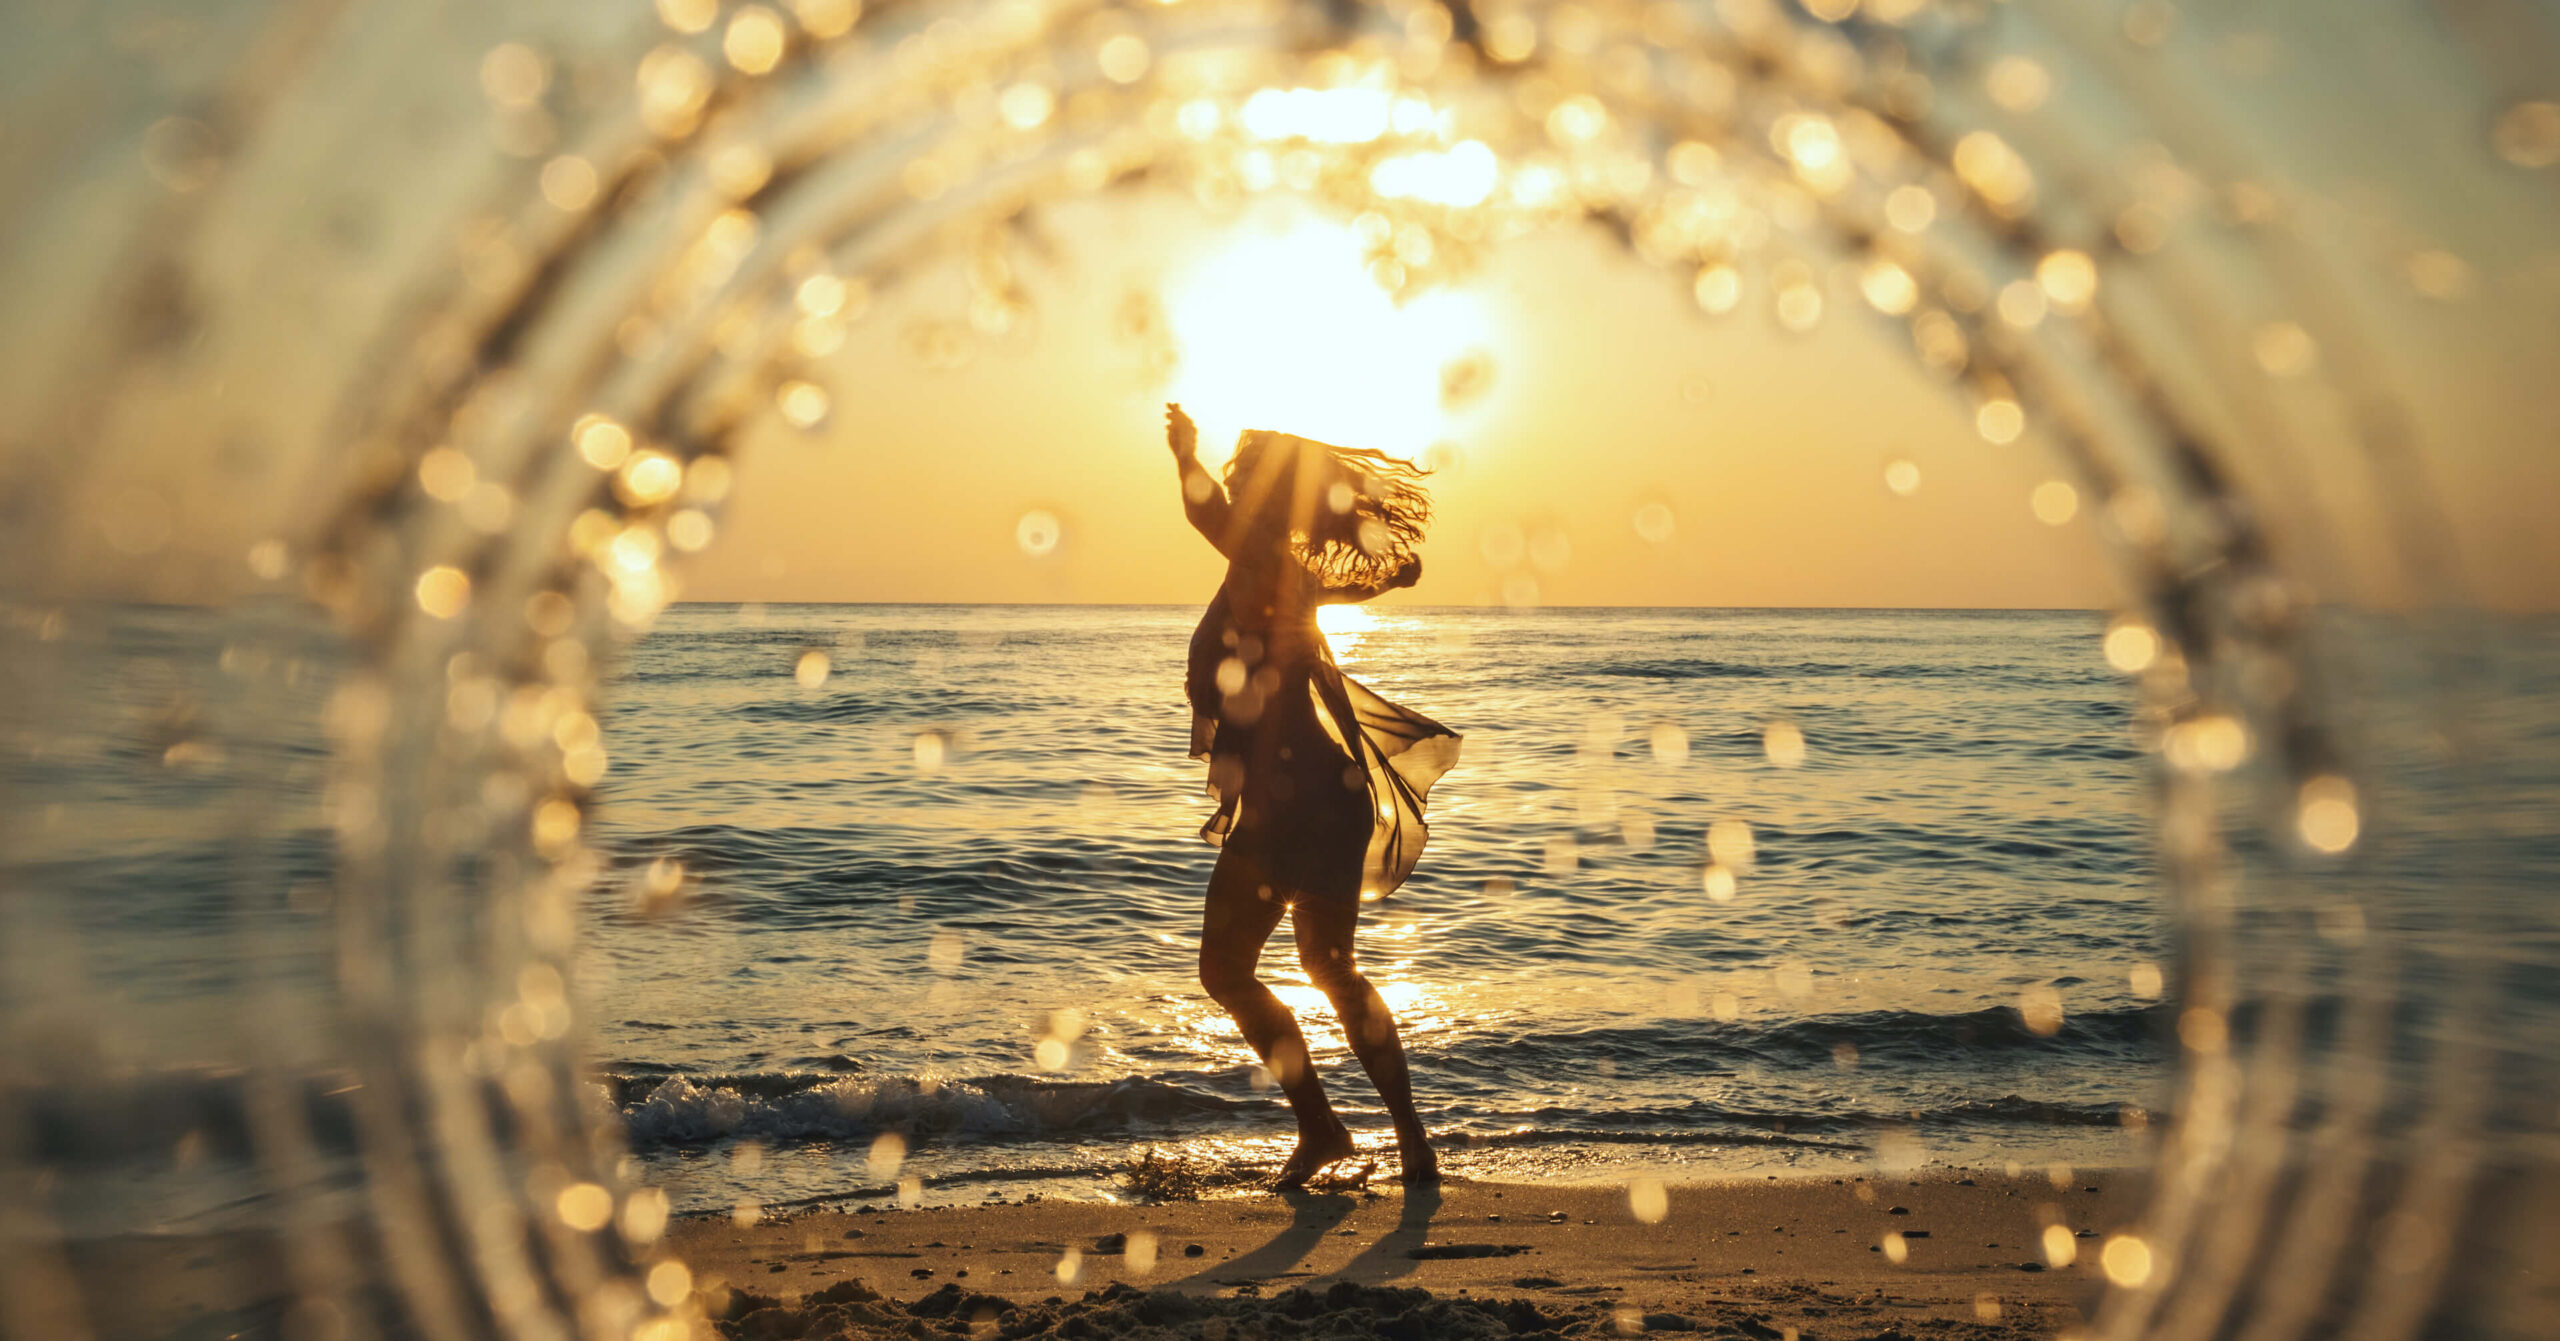 Woman enjoying summer at the beach July 2022 featured